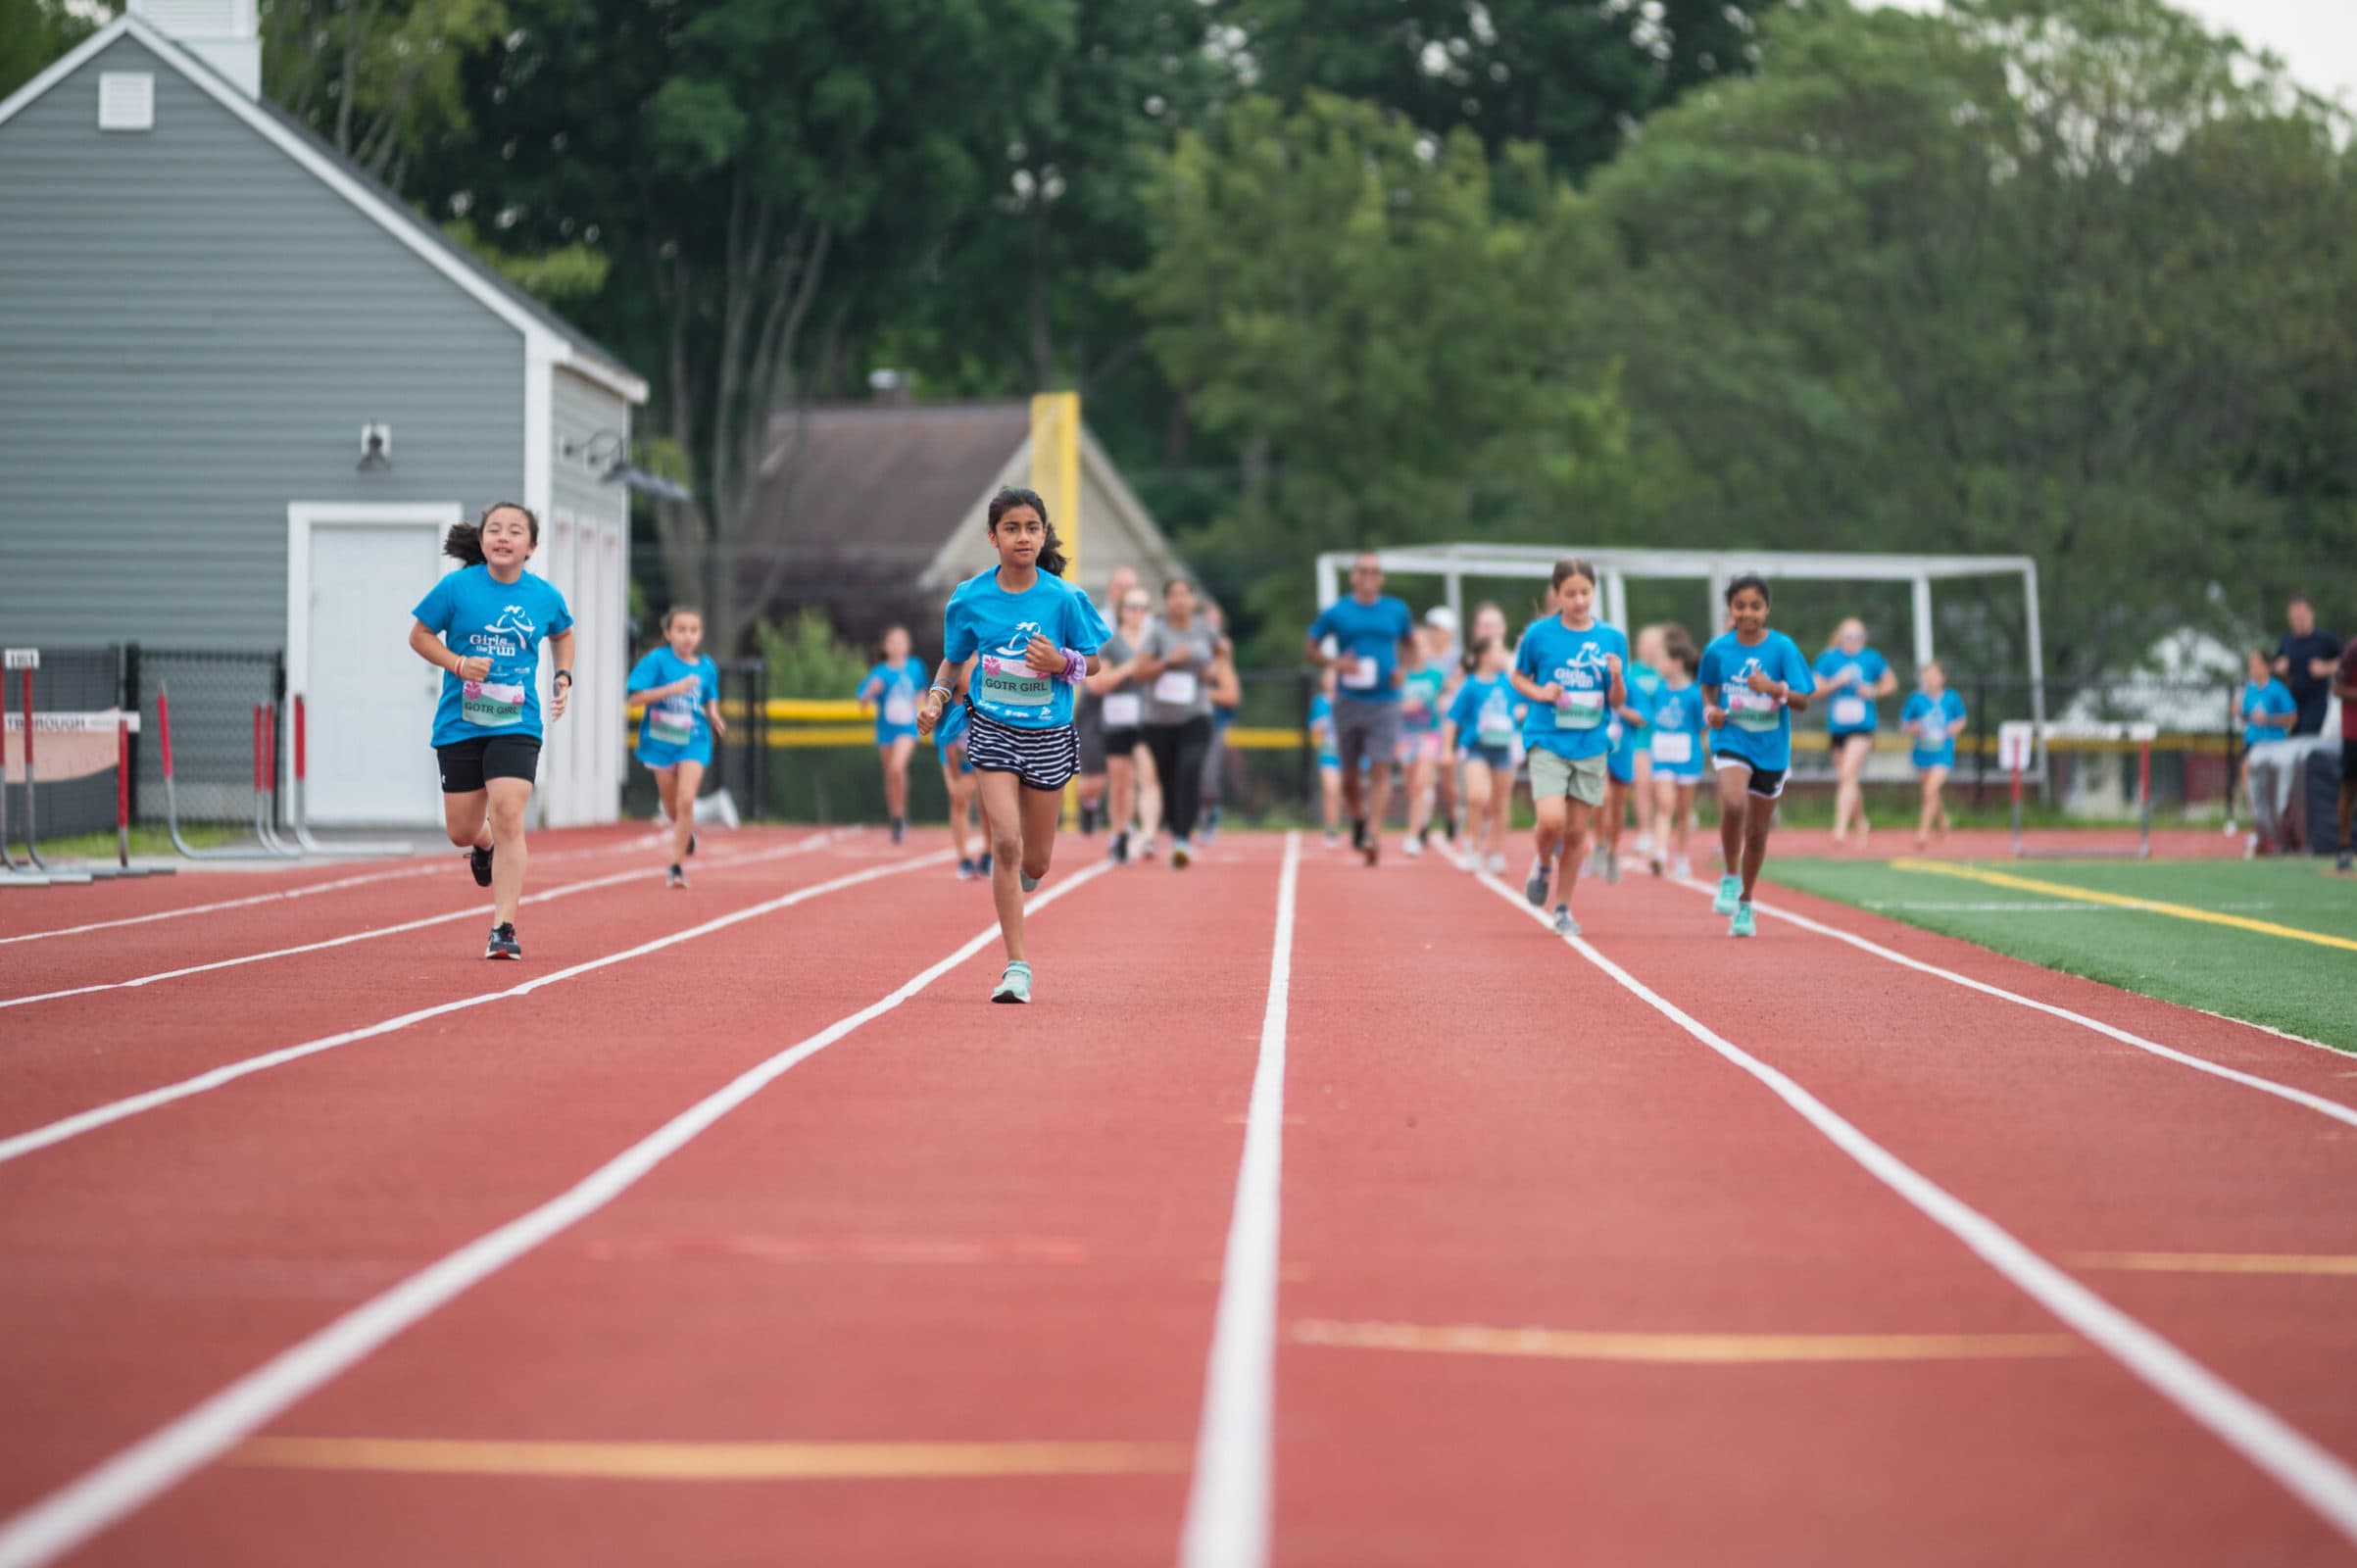 Girls on the Run, Heart and Soul running groups cap season with 5K run